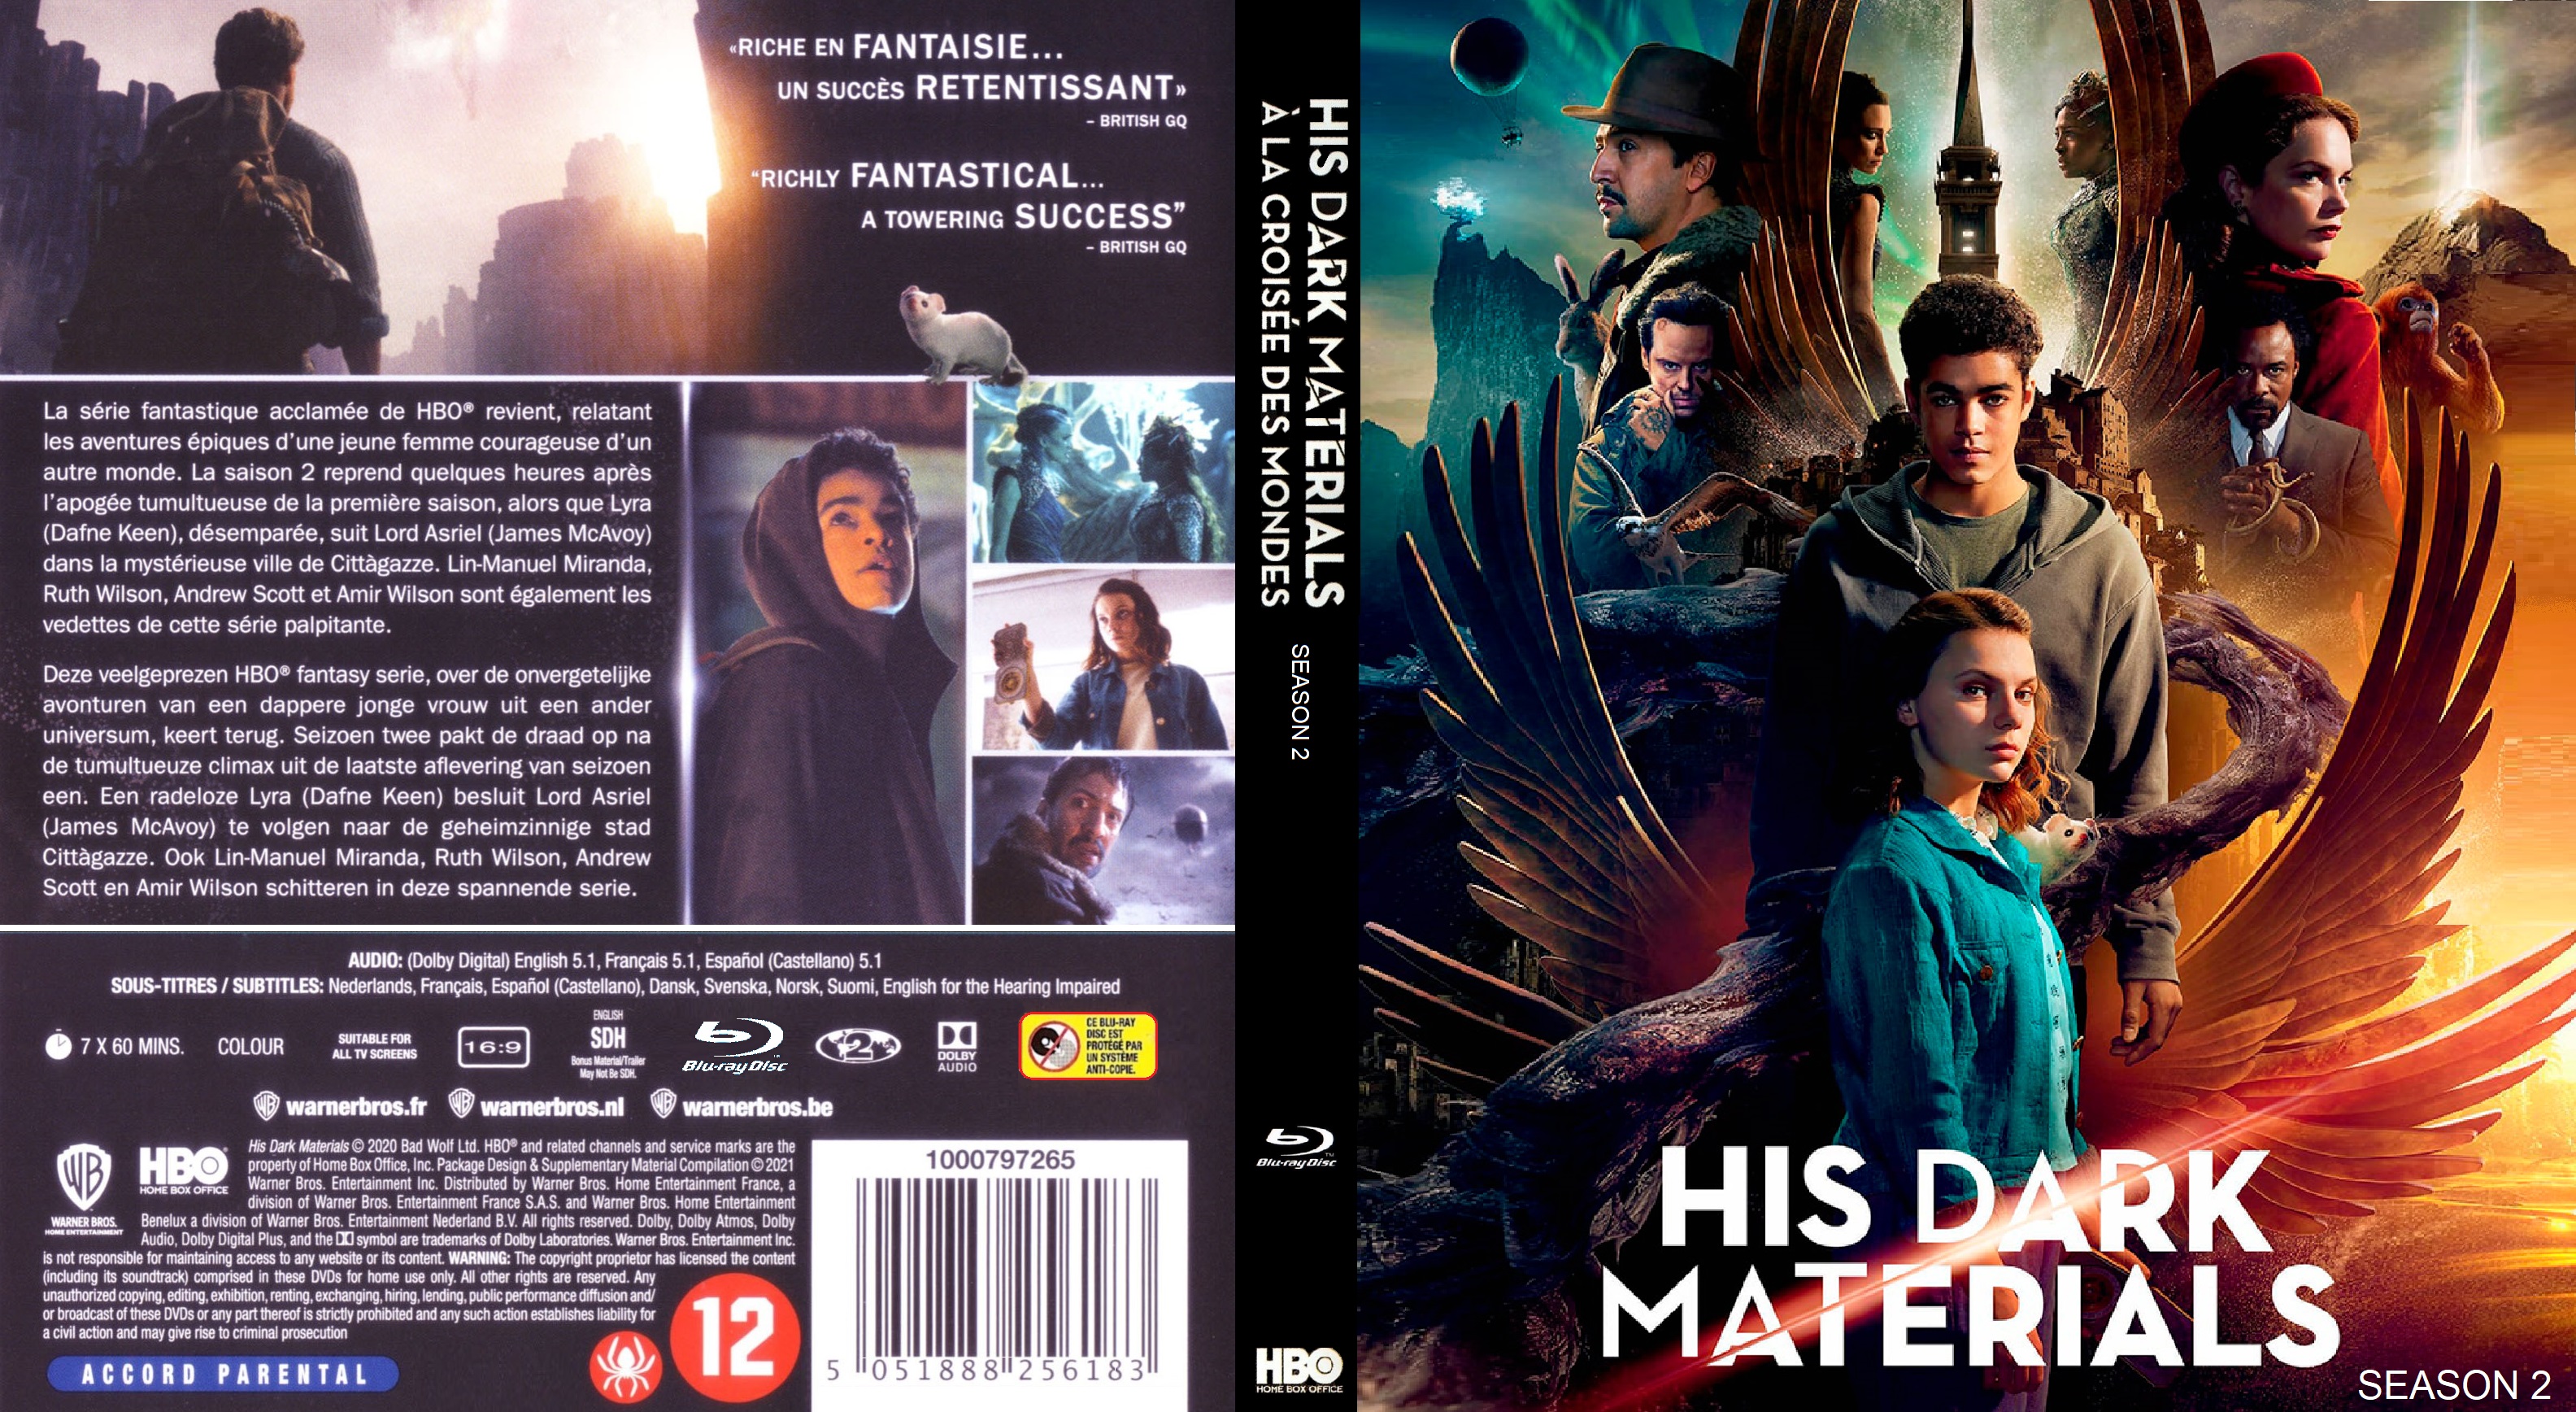 Jaquette DVD His Dark Materials saison 2  BLU RAY custom